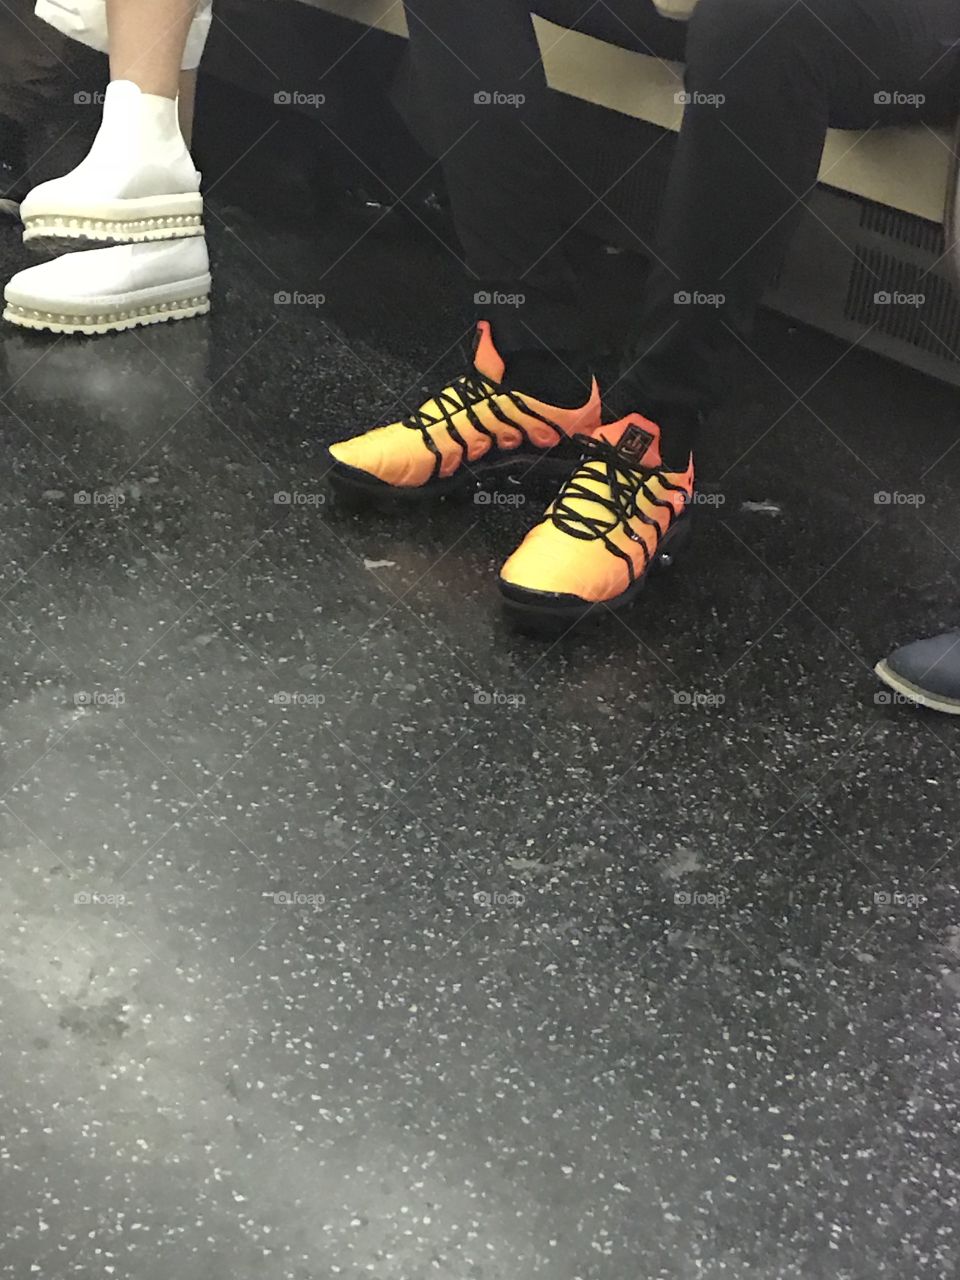 Subway shoes